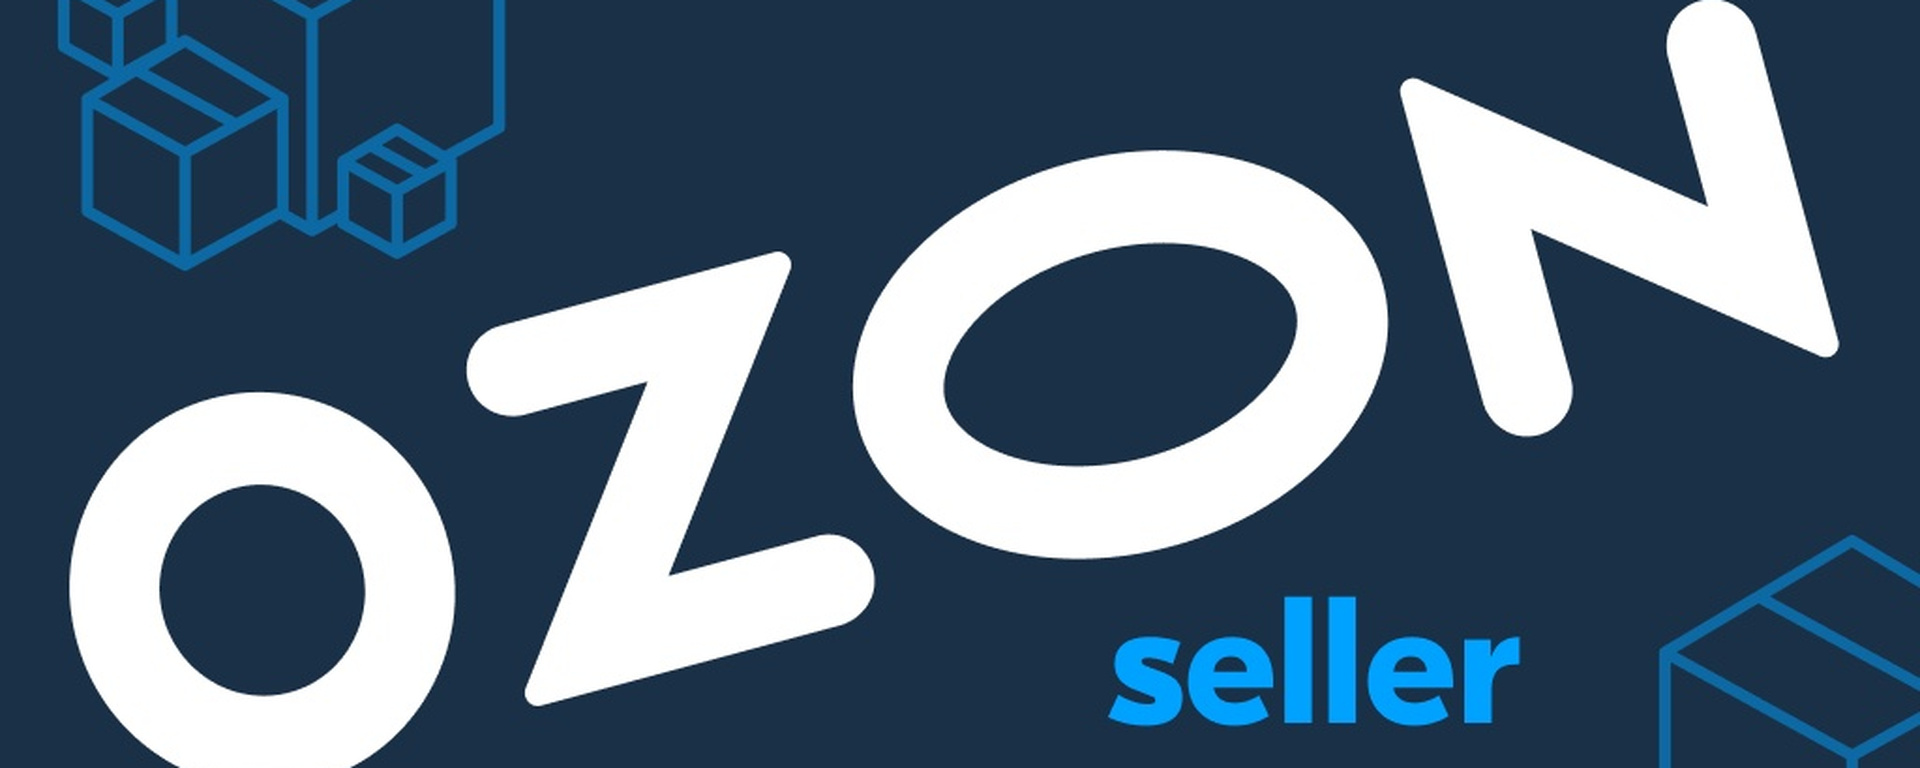 Ozonseller ru вход в личный кабинет. Озон seller. OZON логотип. OZON seller логотип. OZON seller личный.